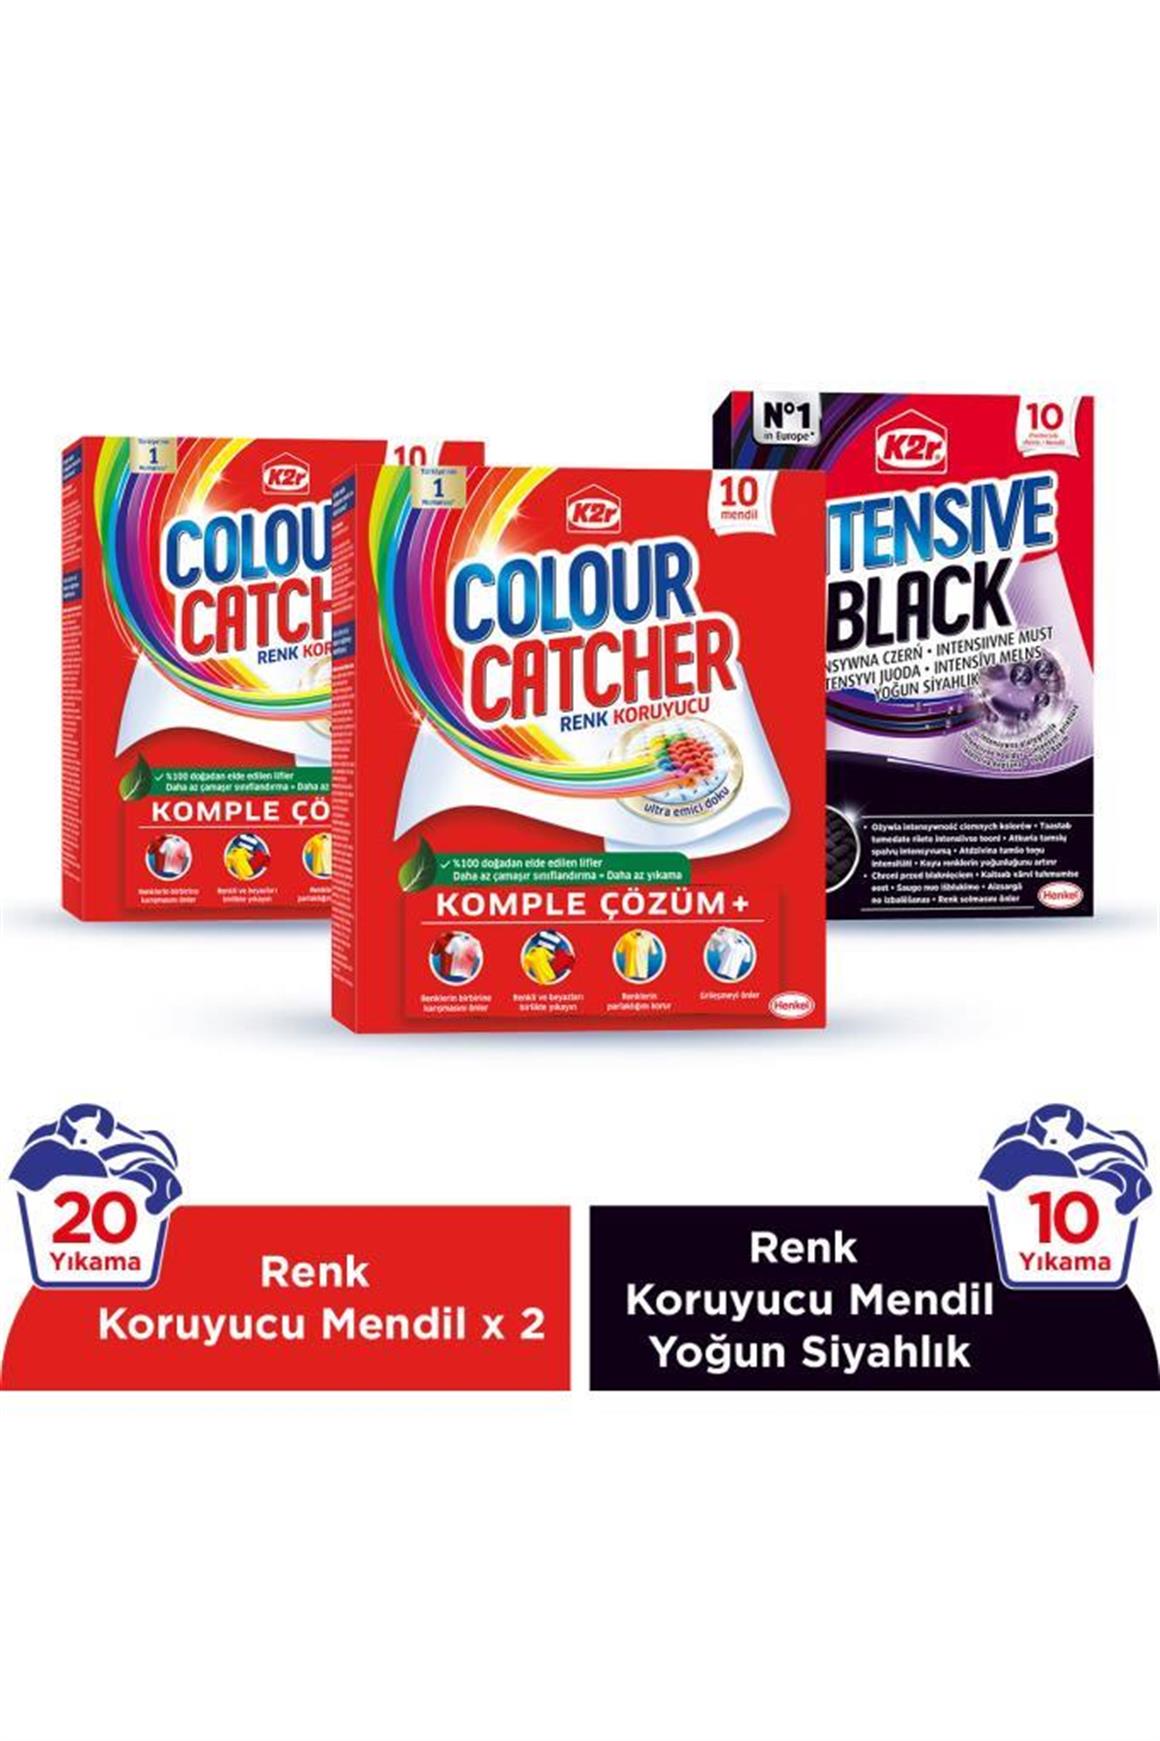 K2R Renk Koruyucu Mendil 2 x 10'lu Paket + Yoğun Siyahlık 10'lu Paket (30